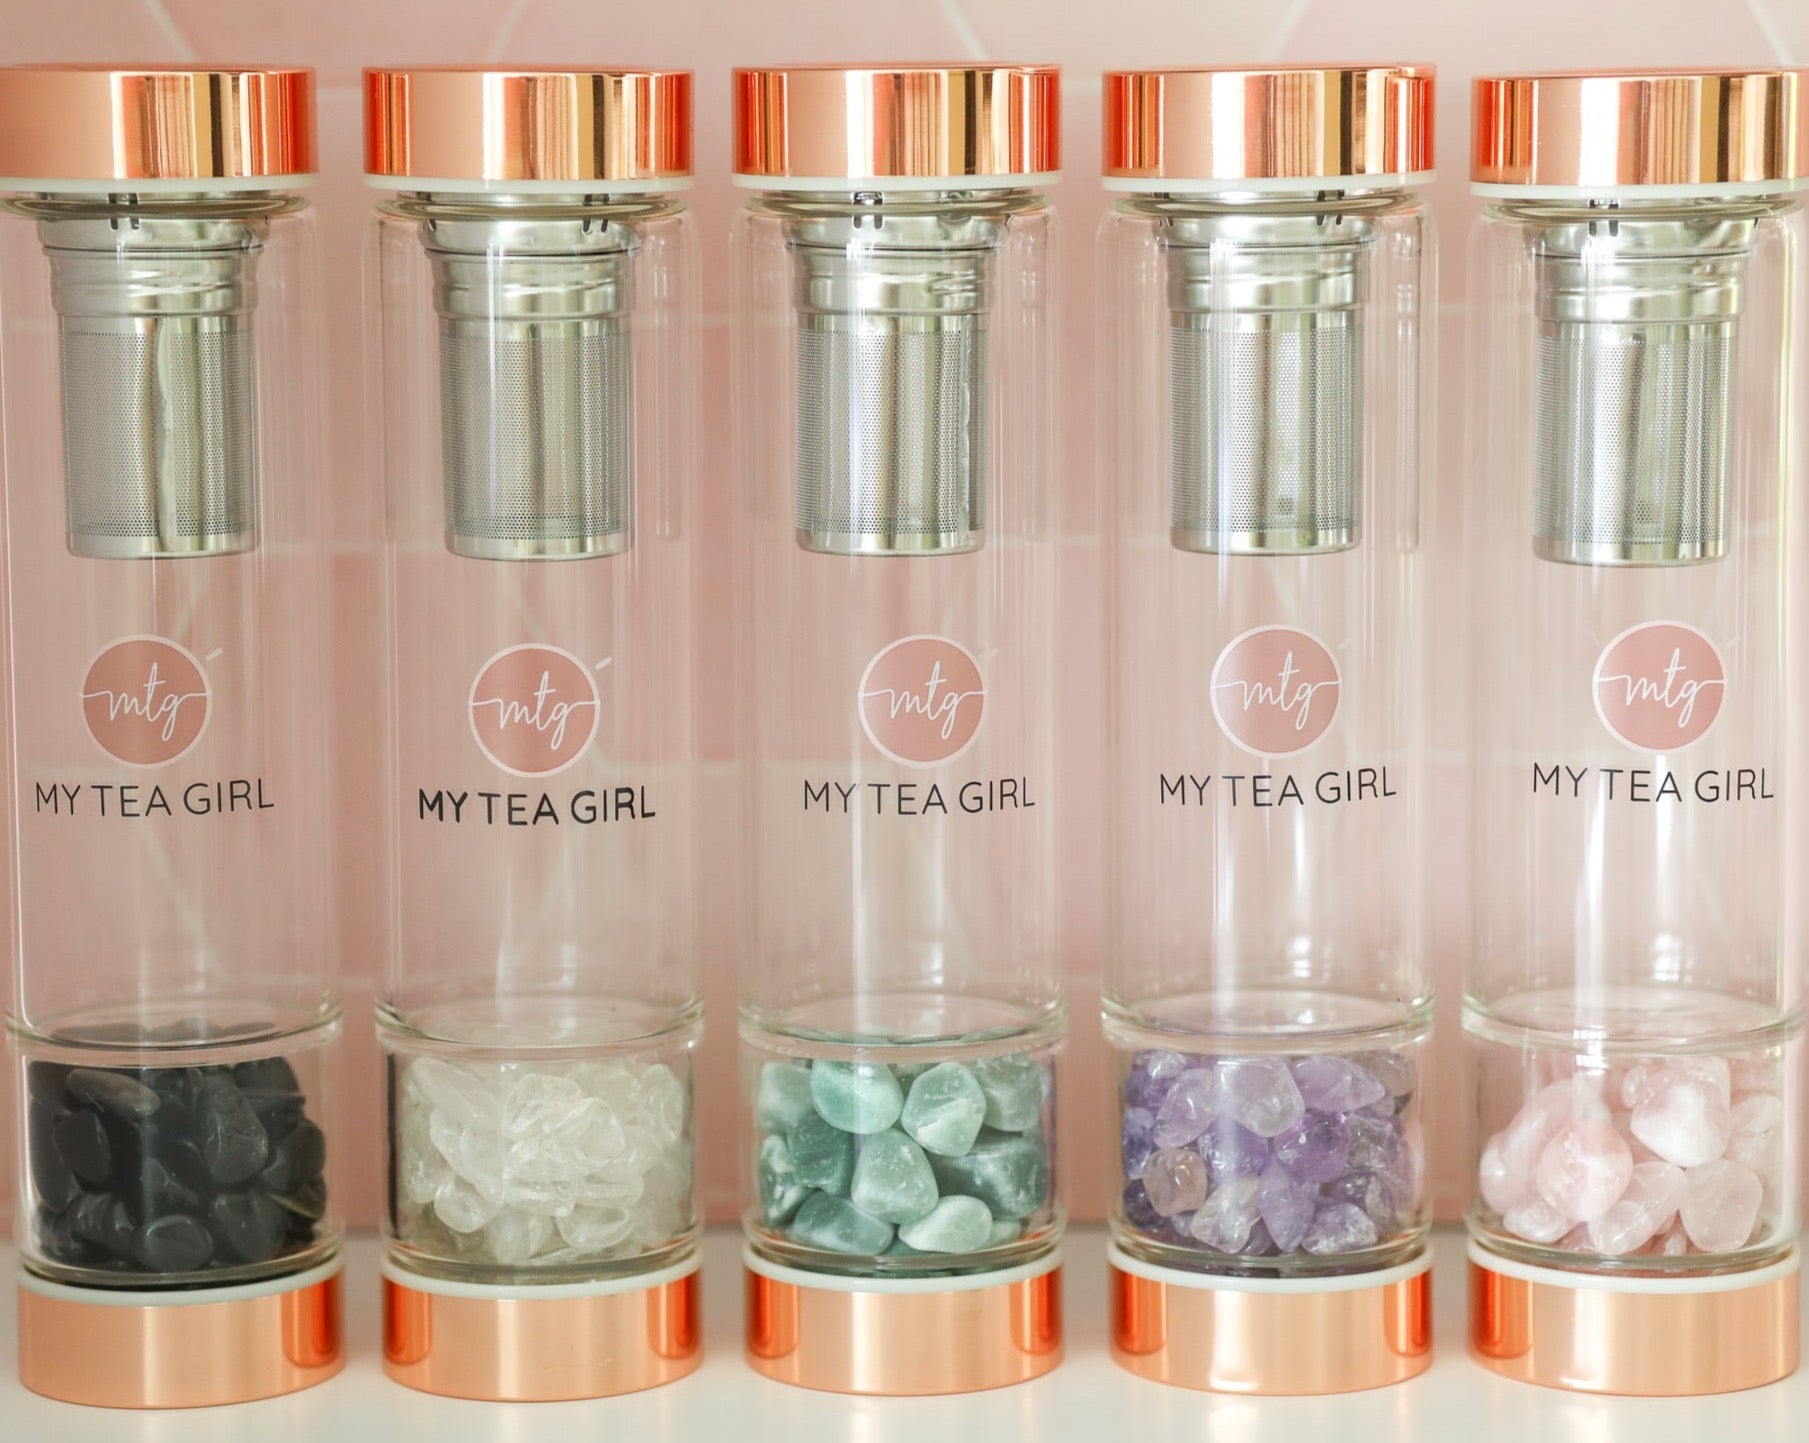 Obsidian, Clear Quartz, Aventurine, Amethyst & Rose Quartz make up the range of Crystal Glass Bottles.